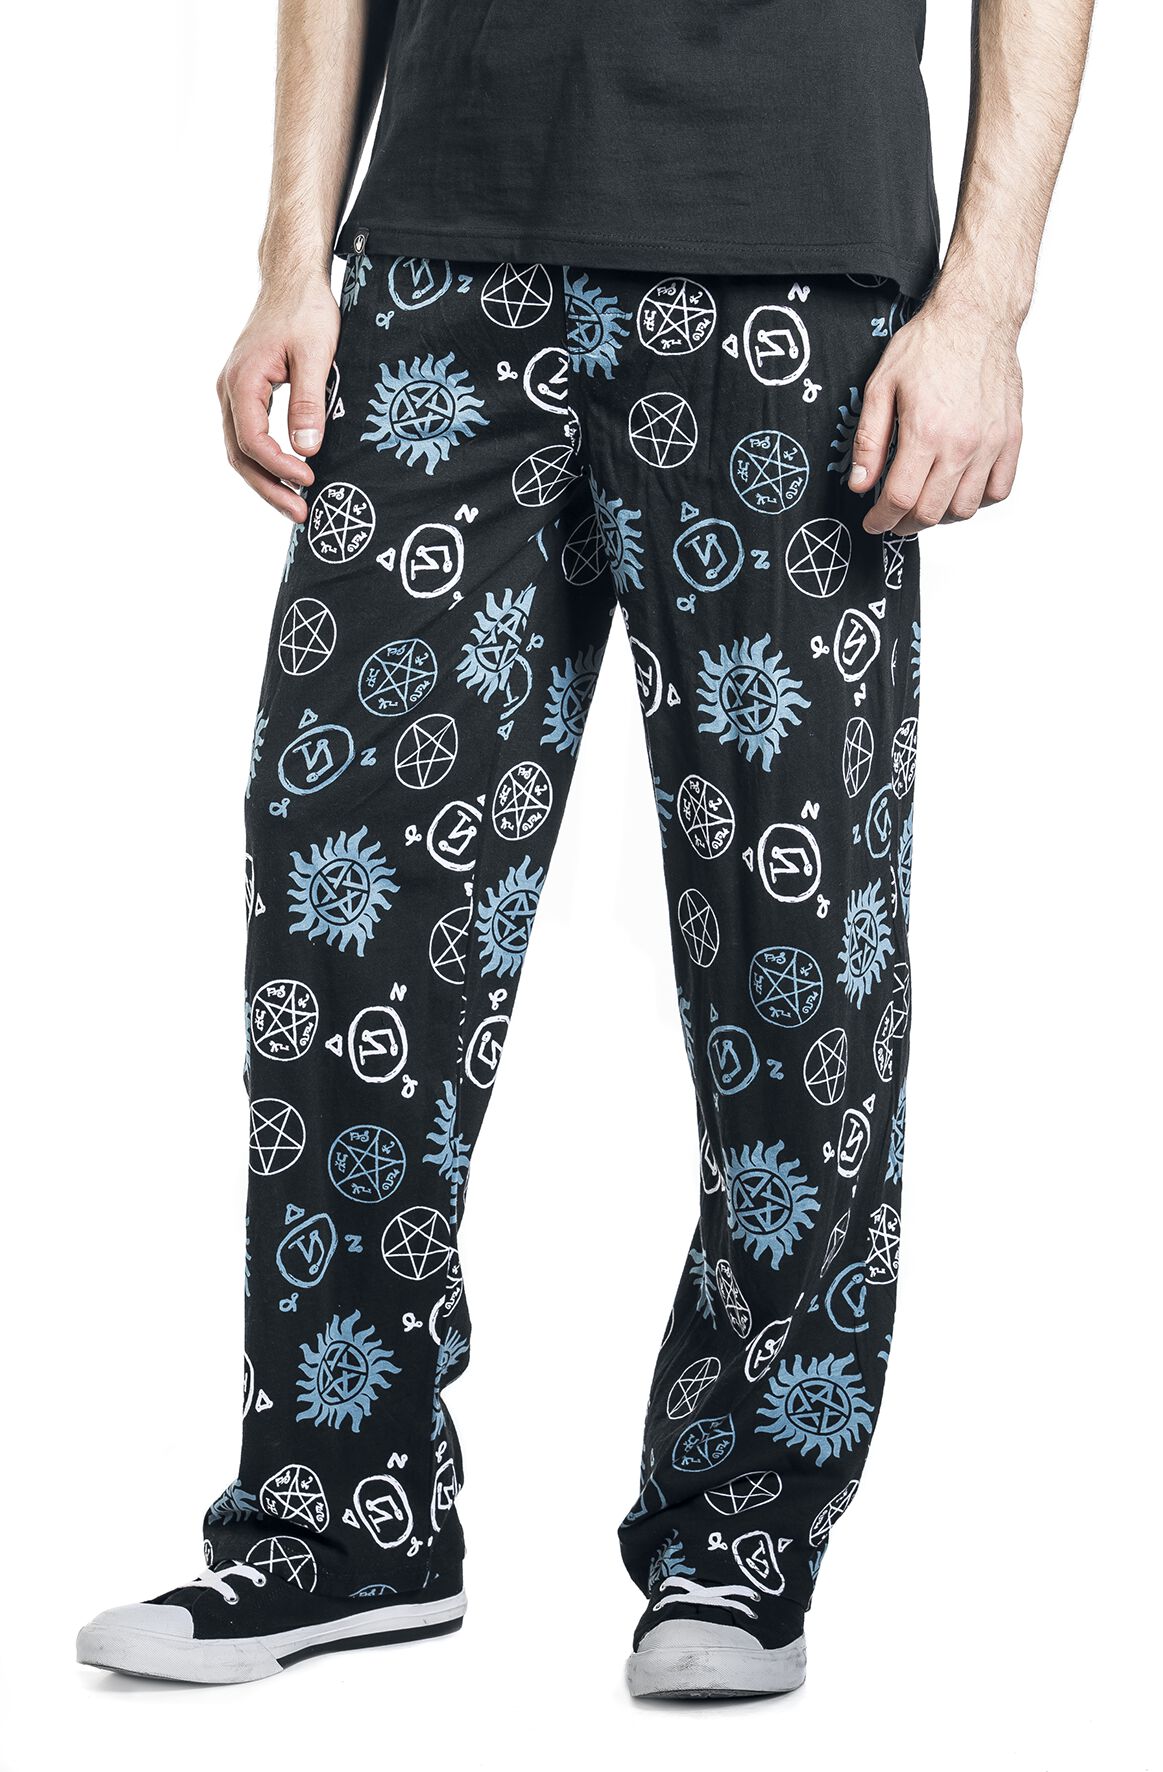 Blue And White Symbols Pyjama Pants Buy online now